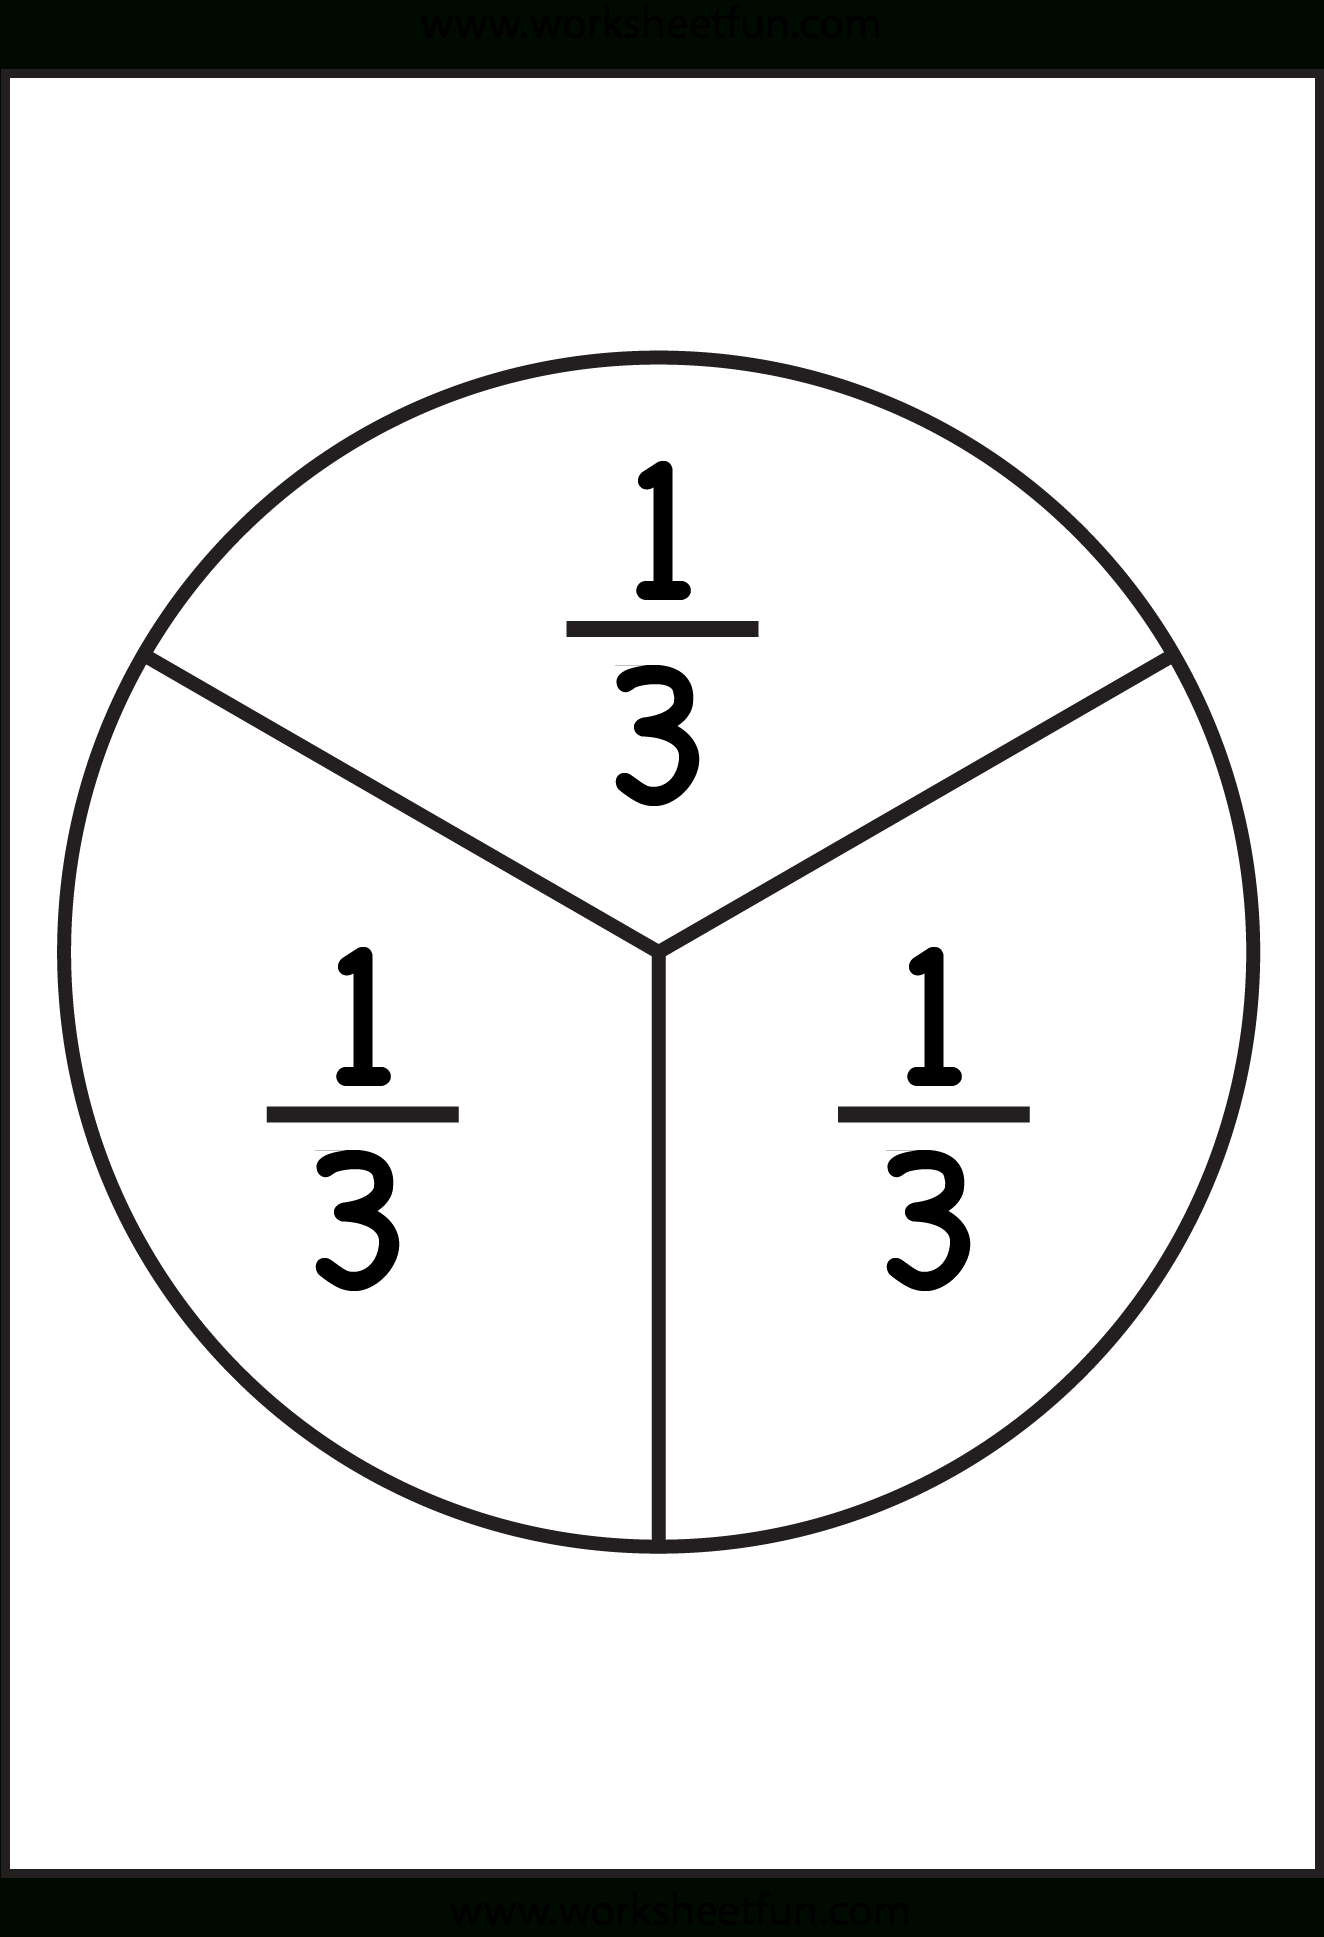 Fraction Circles - 11 Worksheets - 1/2,1/3,1/4,1/5,1/6,1/7,1/8,1/9,1 - Free Printable Blank Fraction Circles